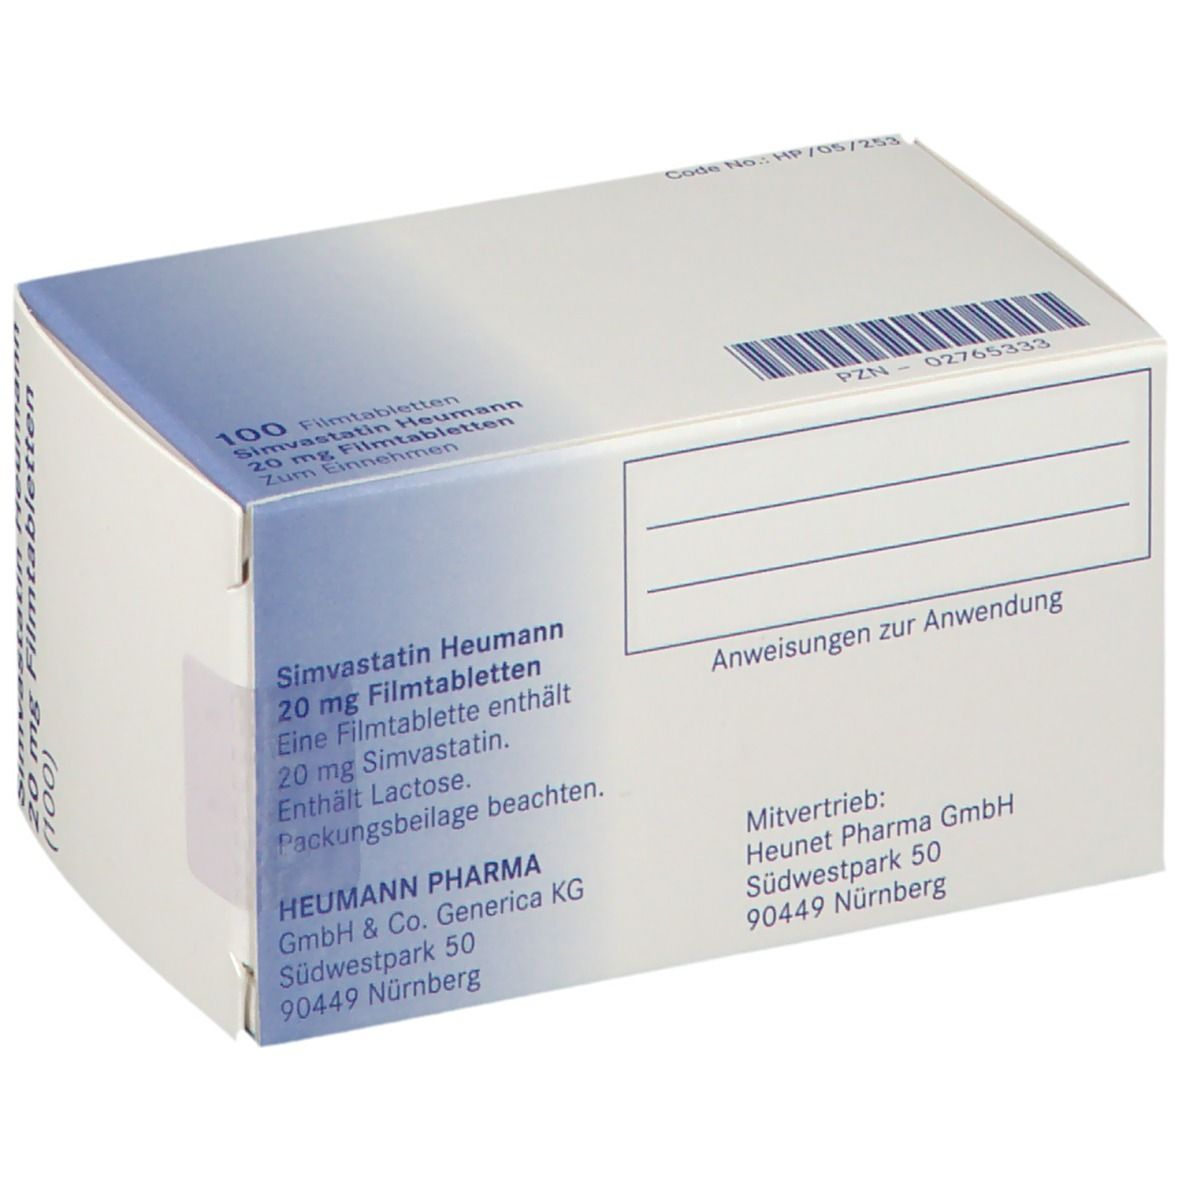 Simvastatin Heumann 20 mg